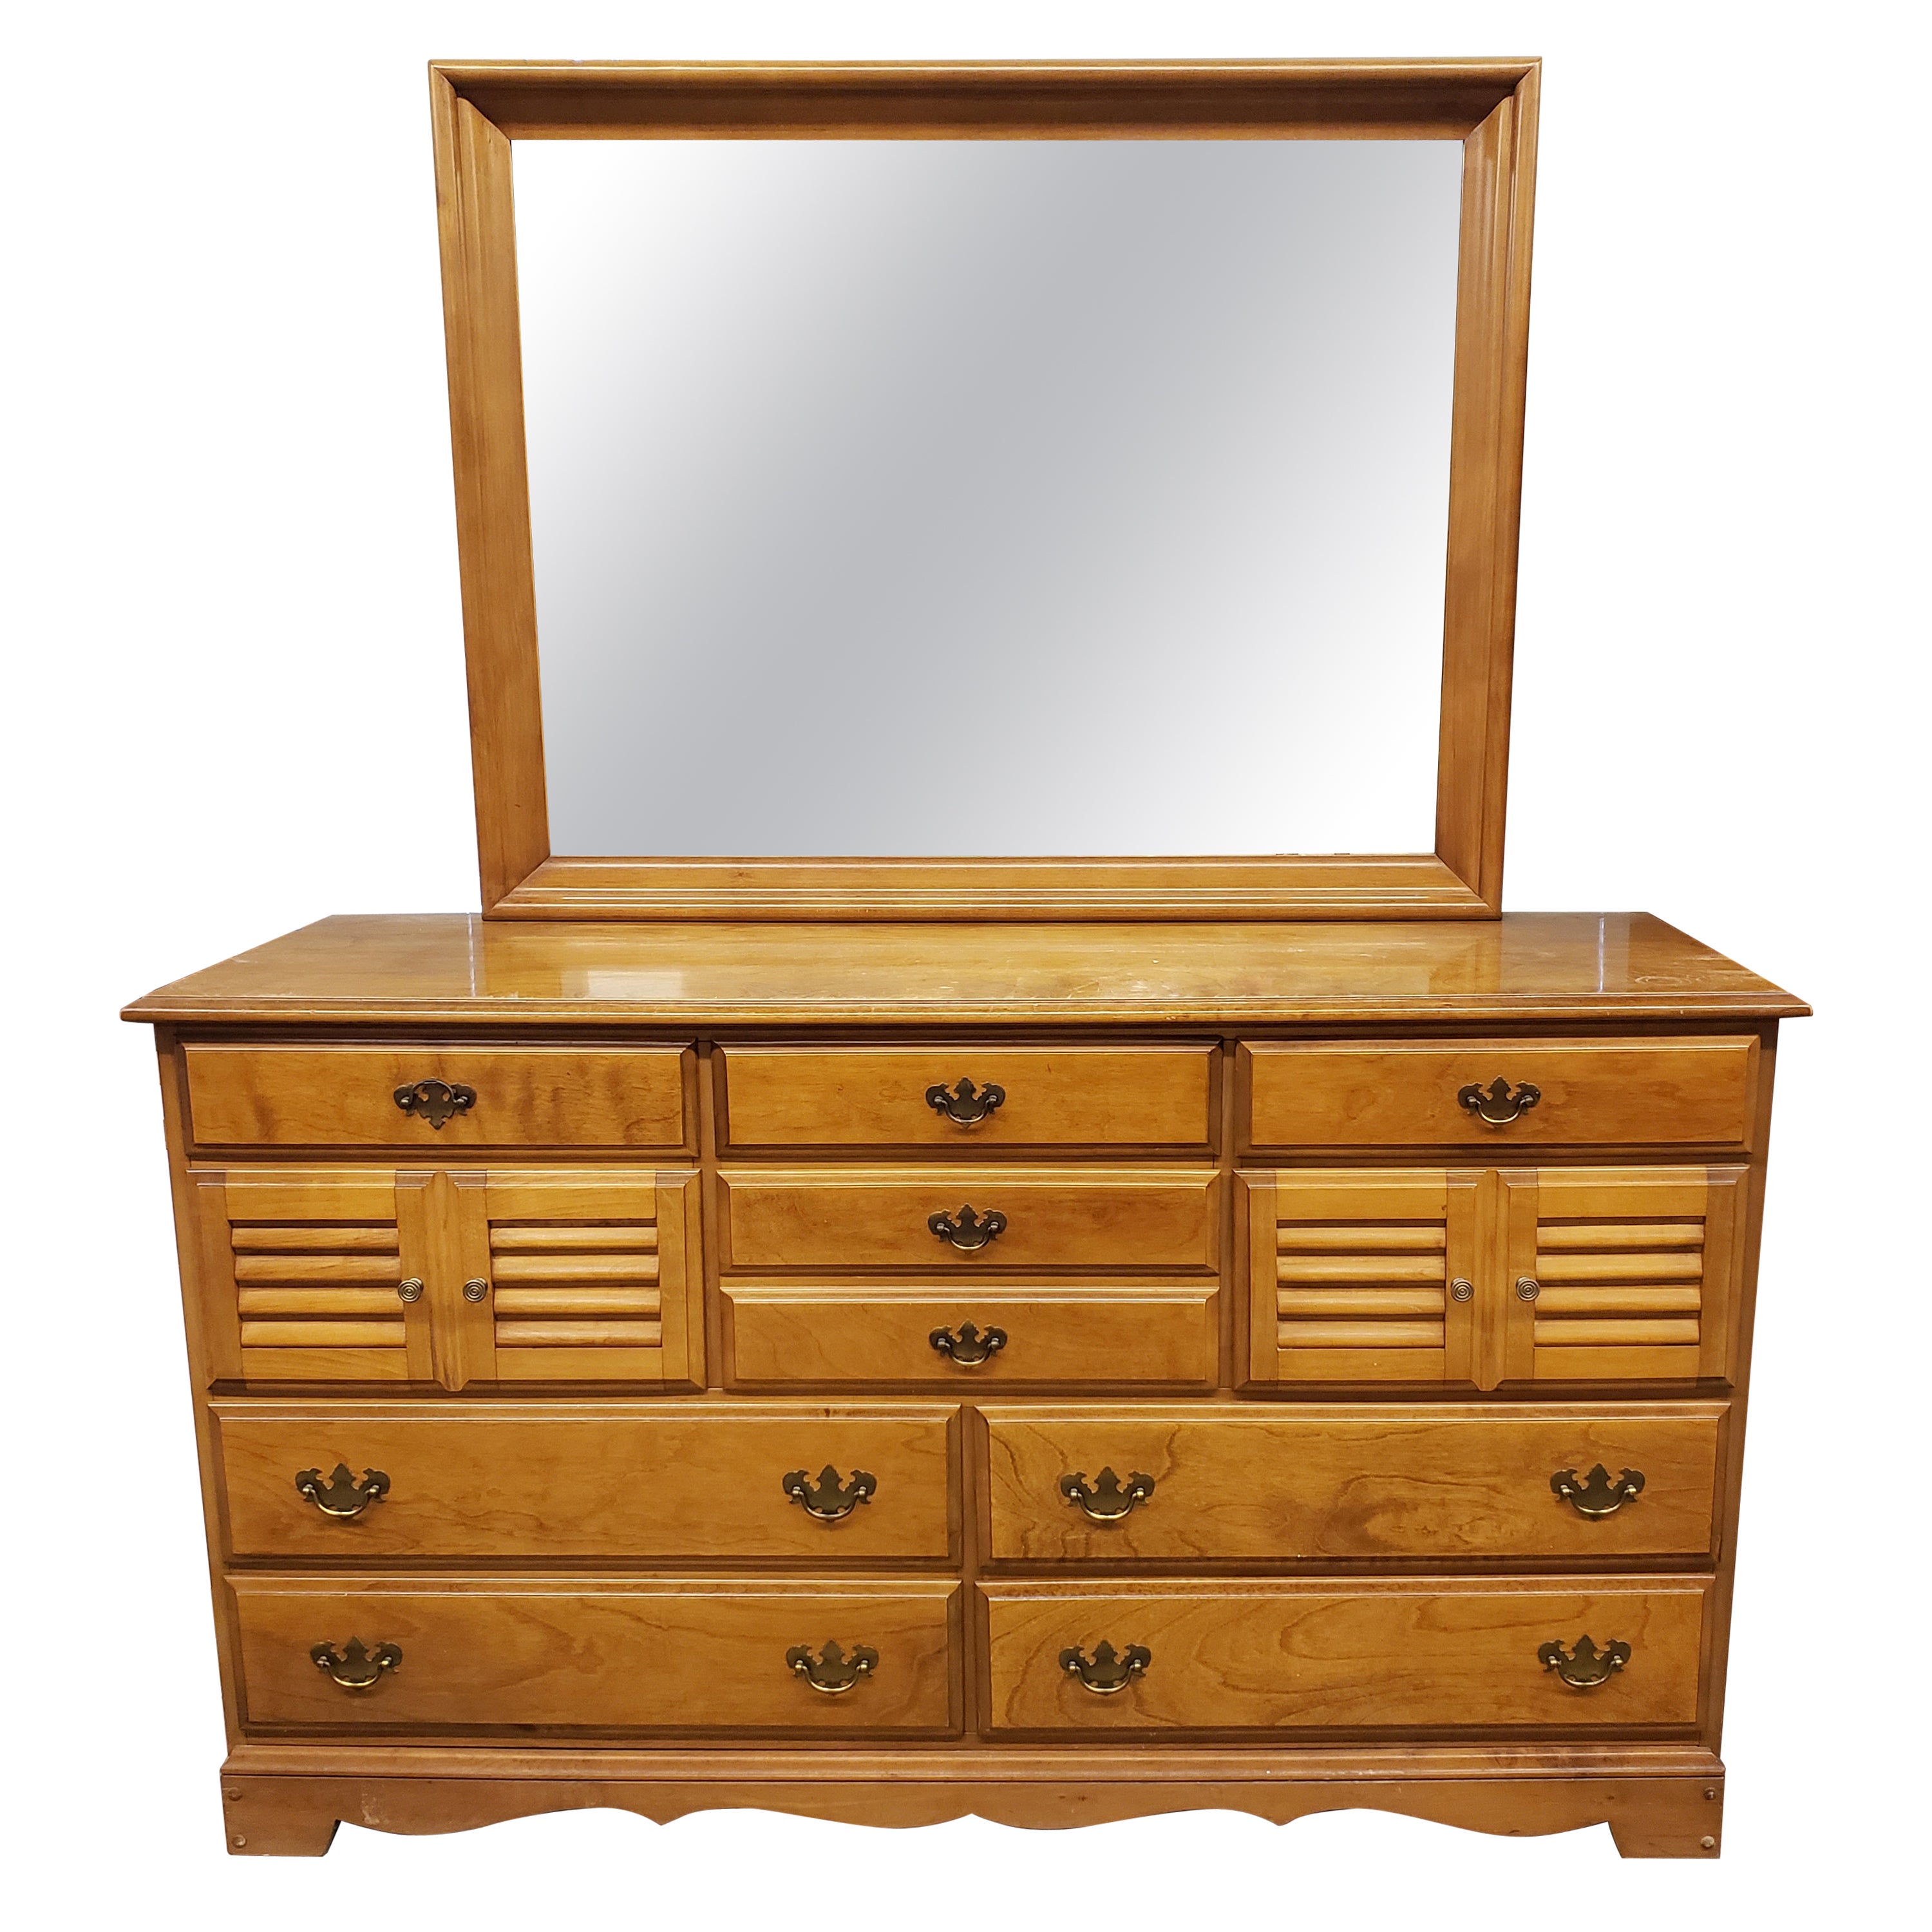 B. P. John Maple Double Dresser with Mirror